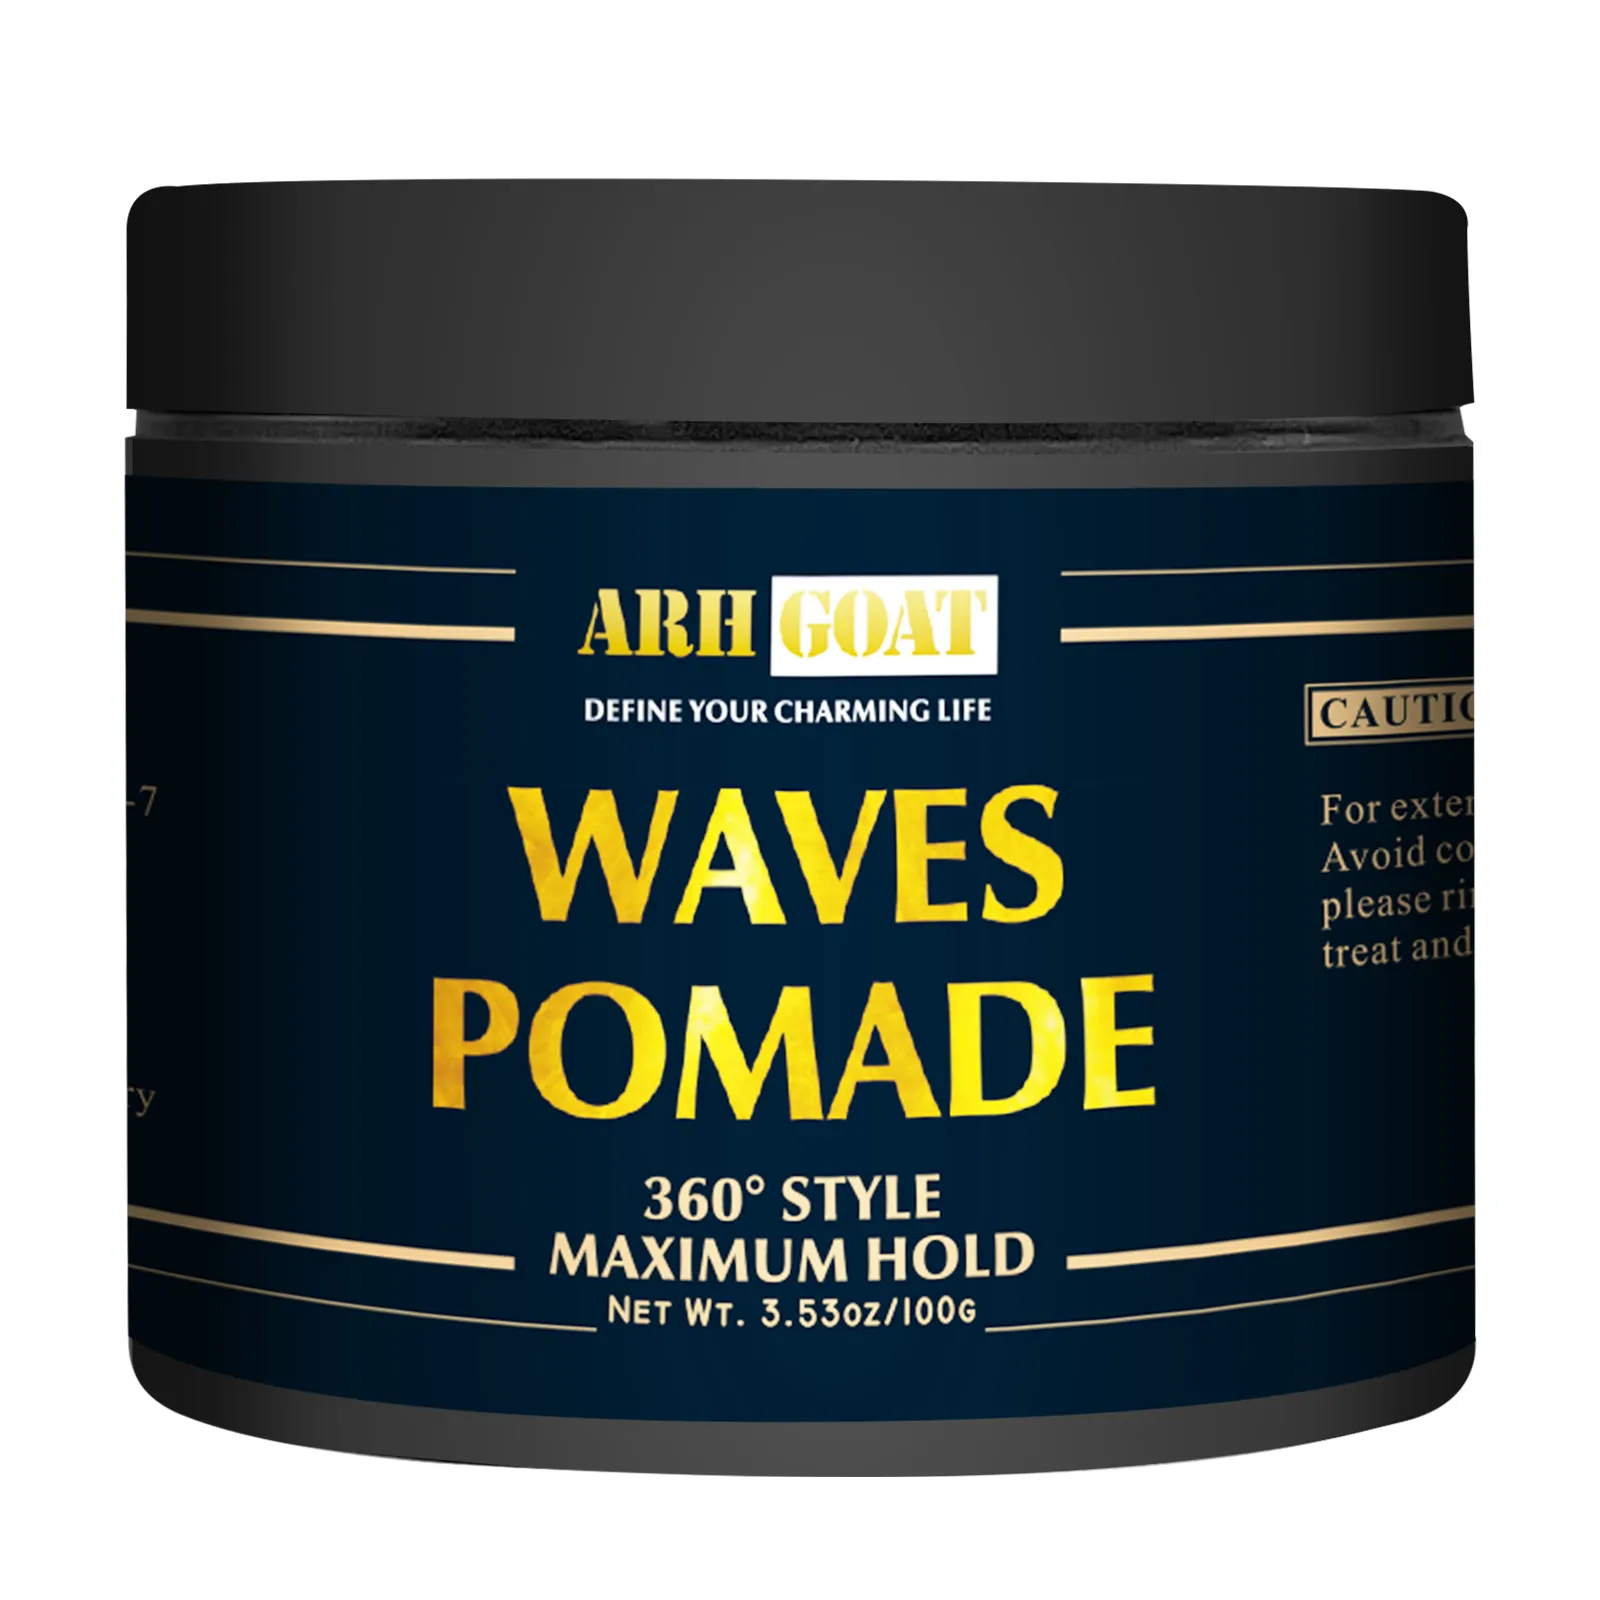 ARHGOAT Onda cabelo pomada Water Based Private label 360 Wave Training, Wolfing Silky Aplicação Suave, Styling, Forte Hold